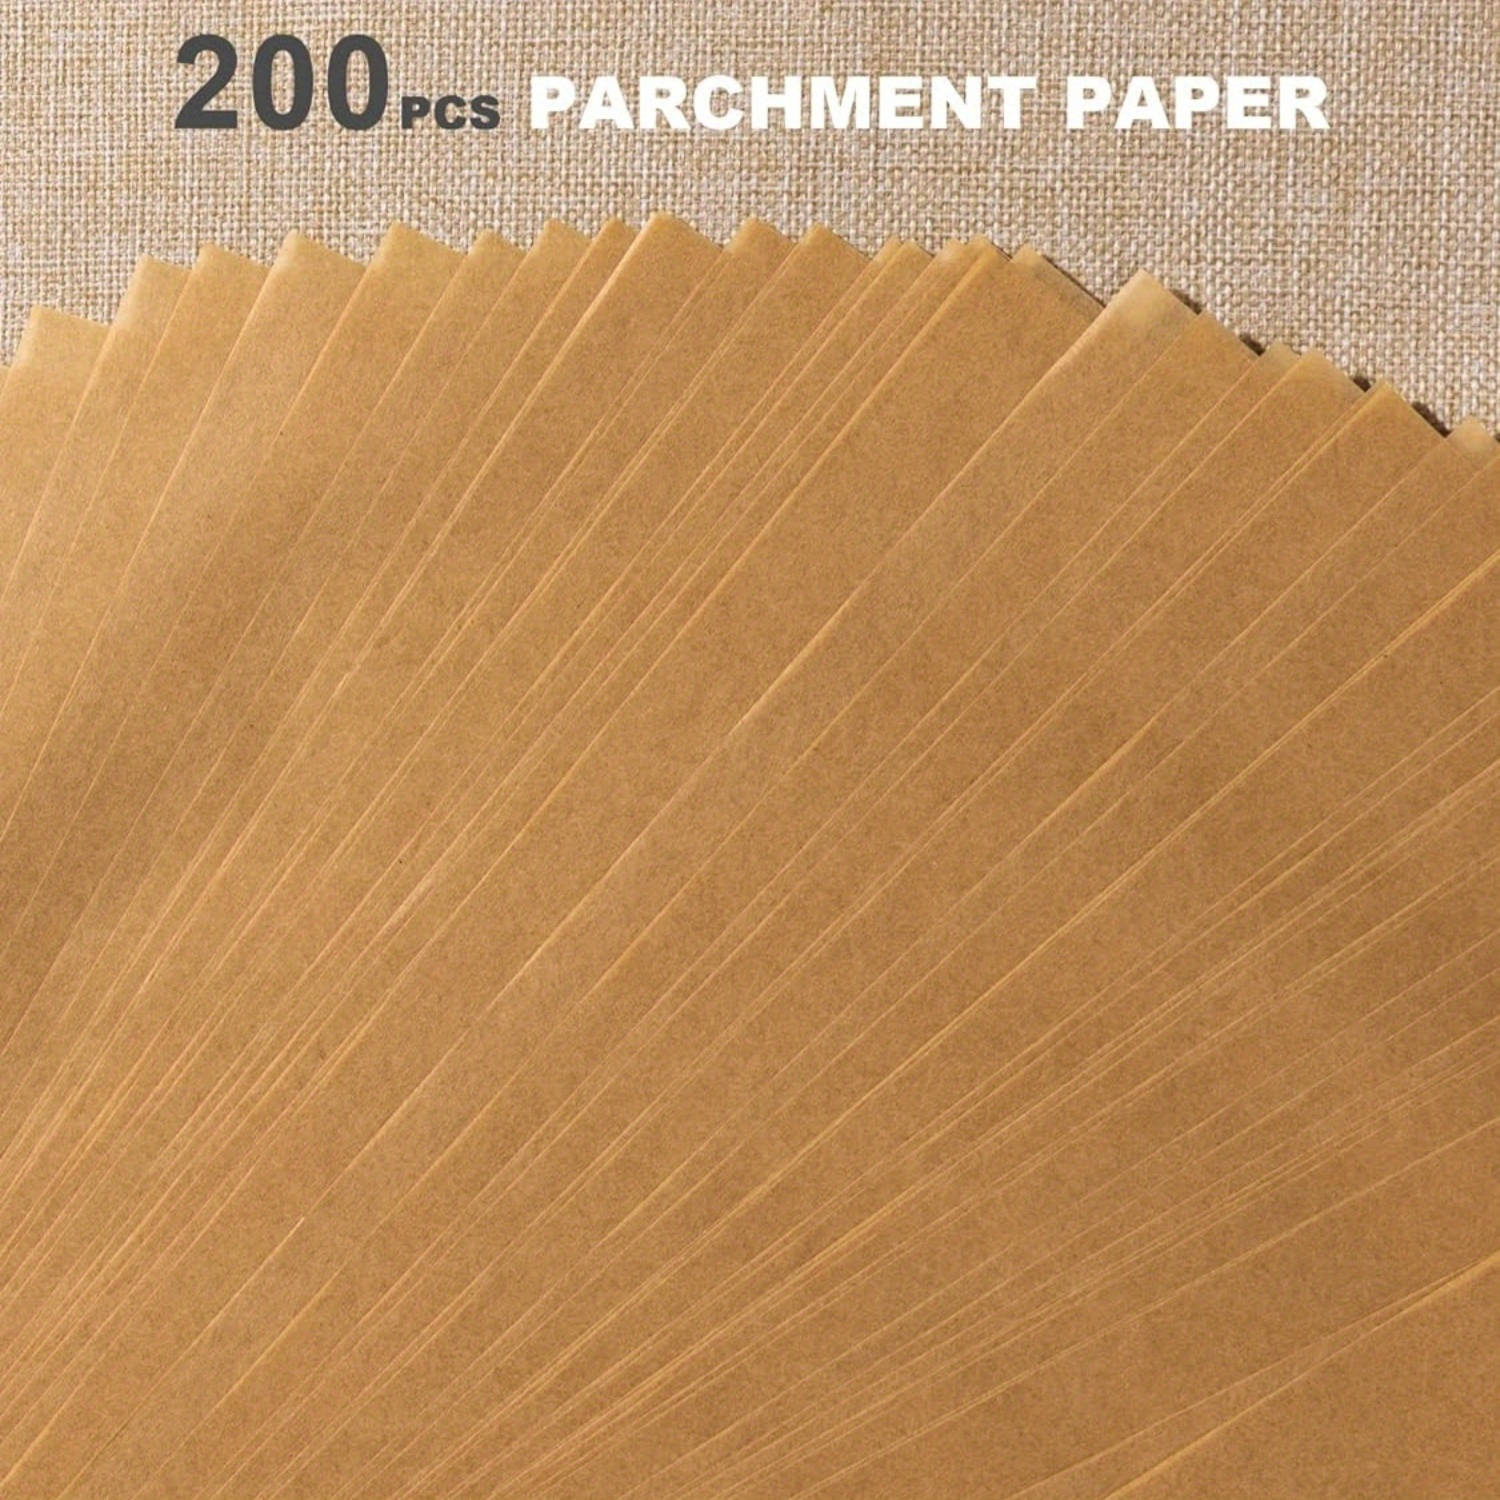  katbite 200Pcs 9x13 inch Heavy Duty Parchment Paper Sheets,  Precut Parchment Paper for Quarter Sheet Pans Liners, Baking Cookies,  Bread, Meat, Pizza, Toaster Oven (9x13): Home & Kitchen